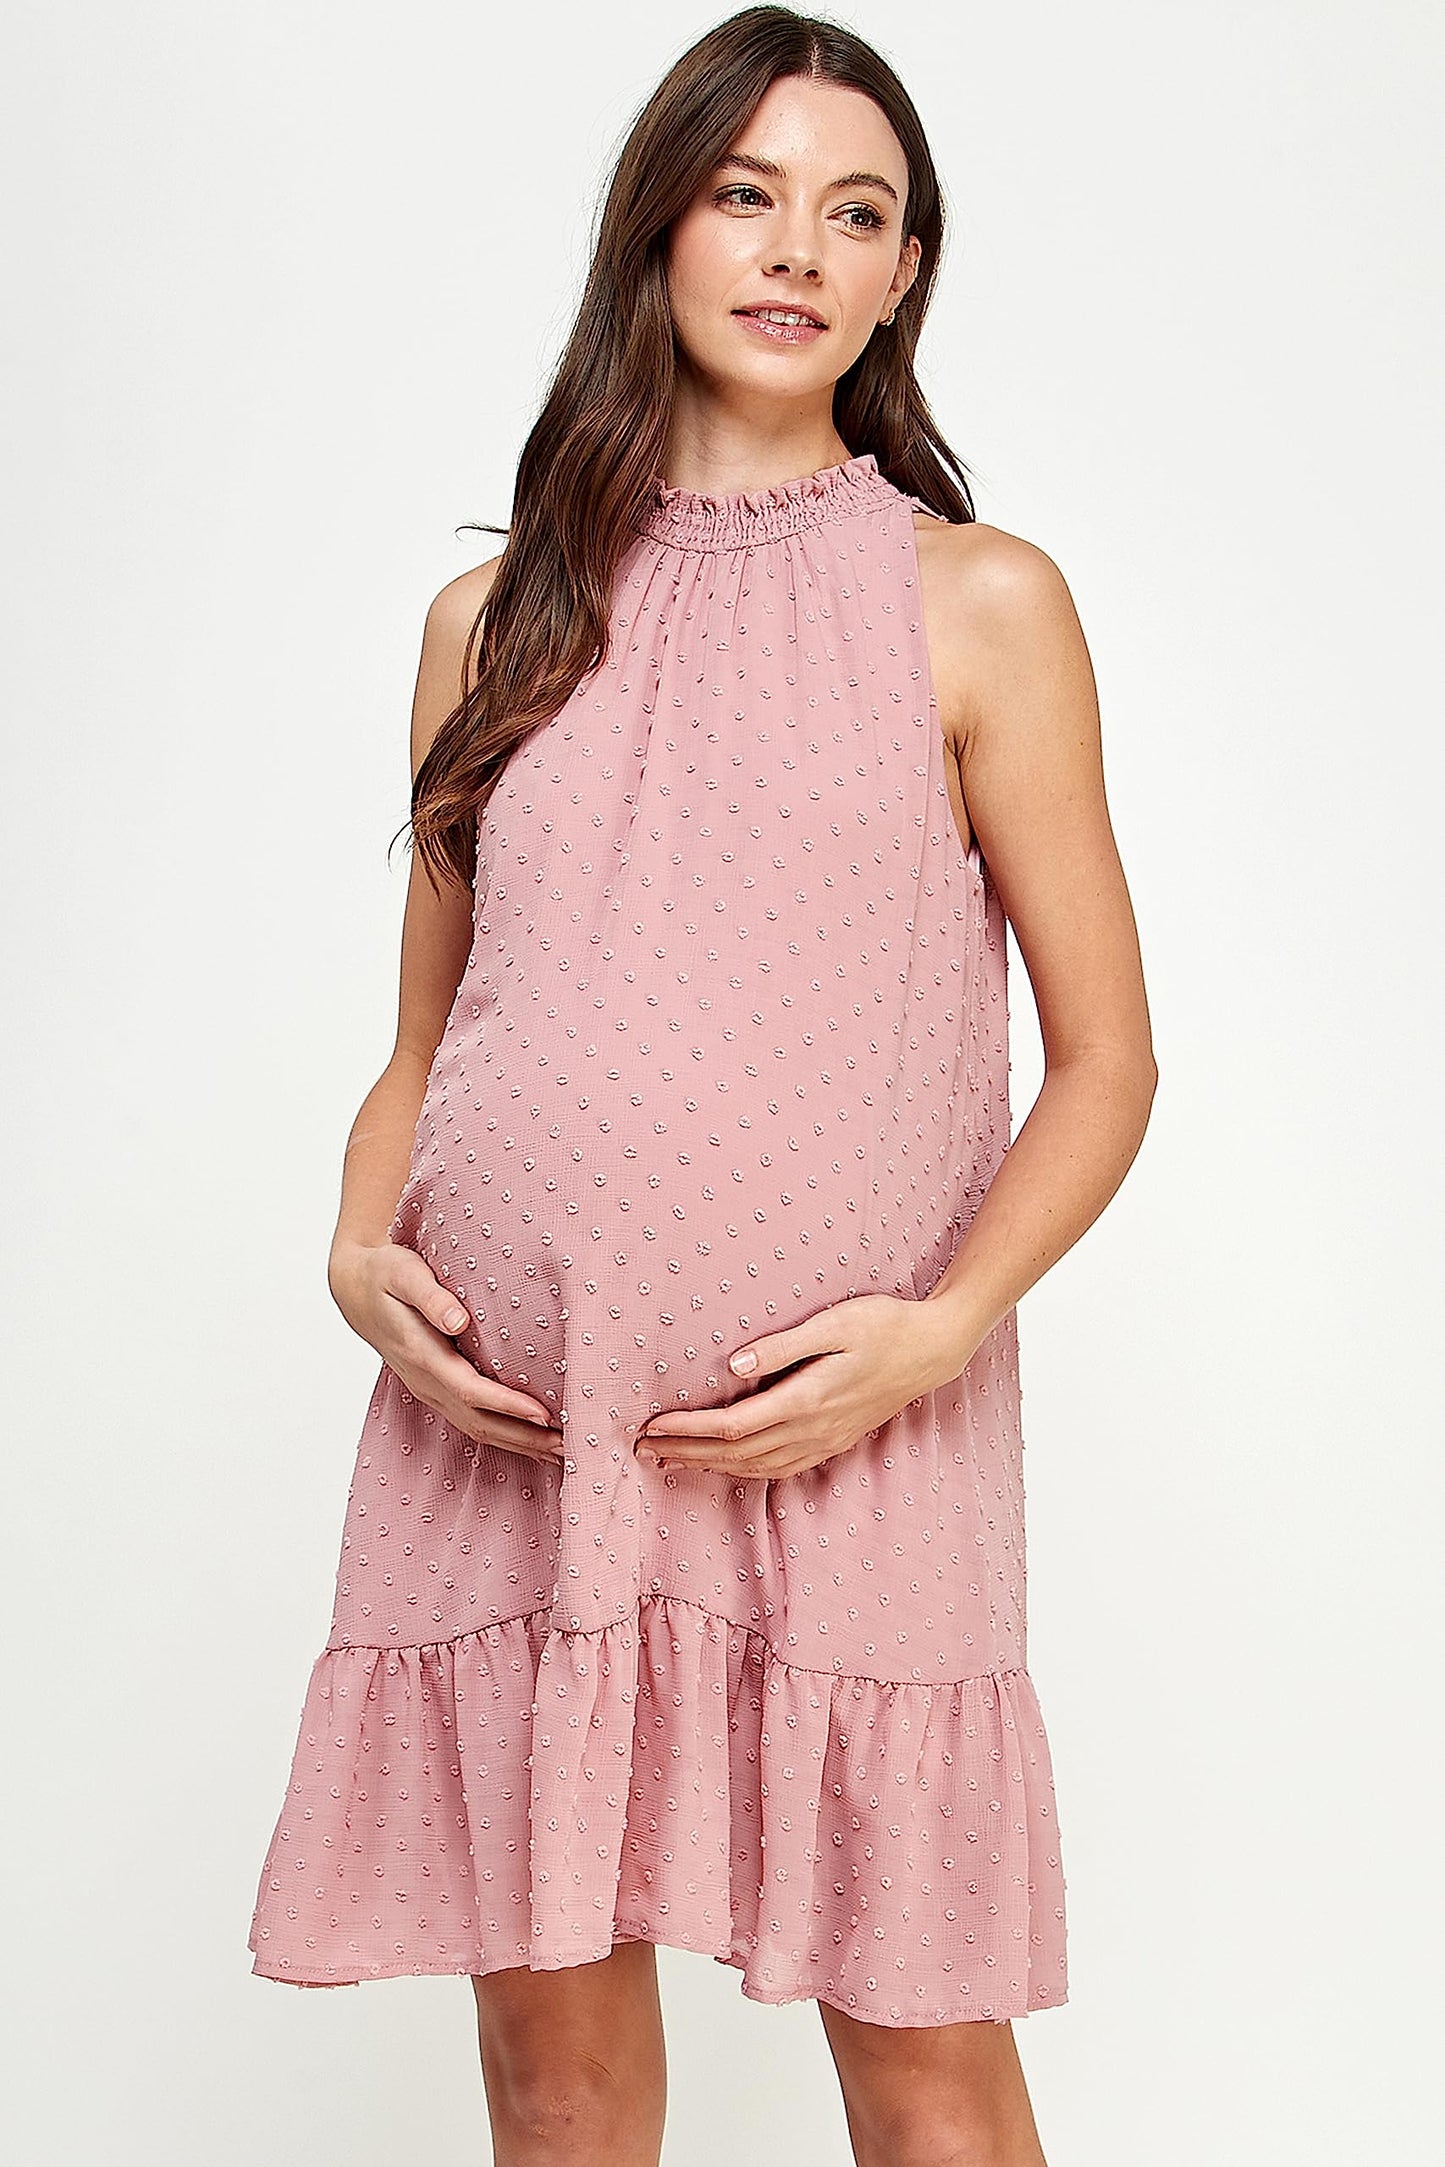 Womens Sleeveless Dot Maternity Dress with Ruffles